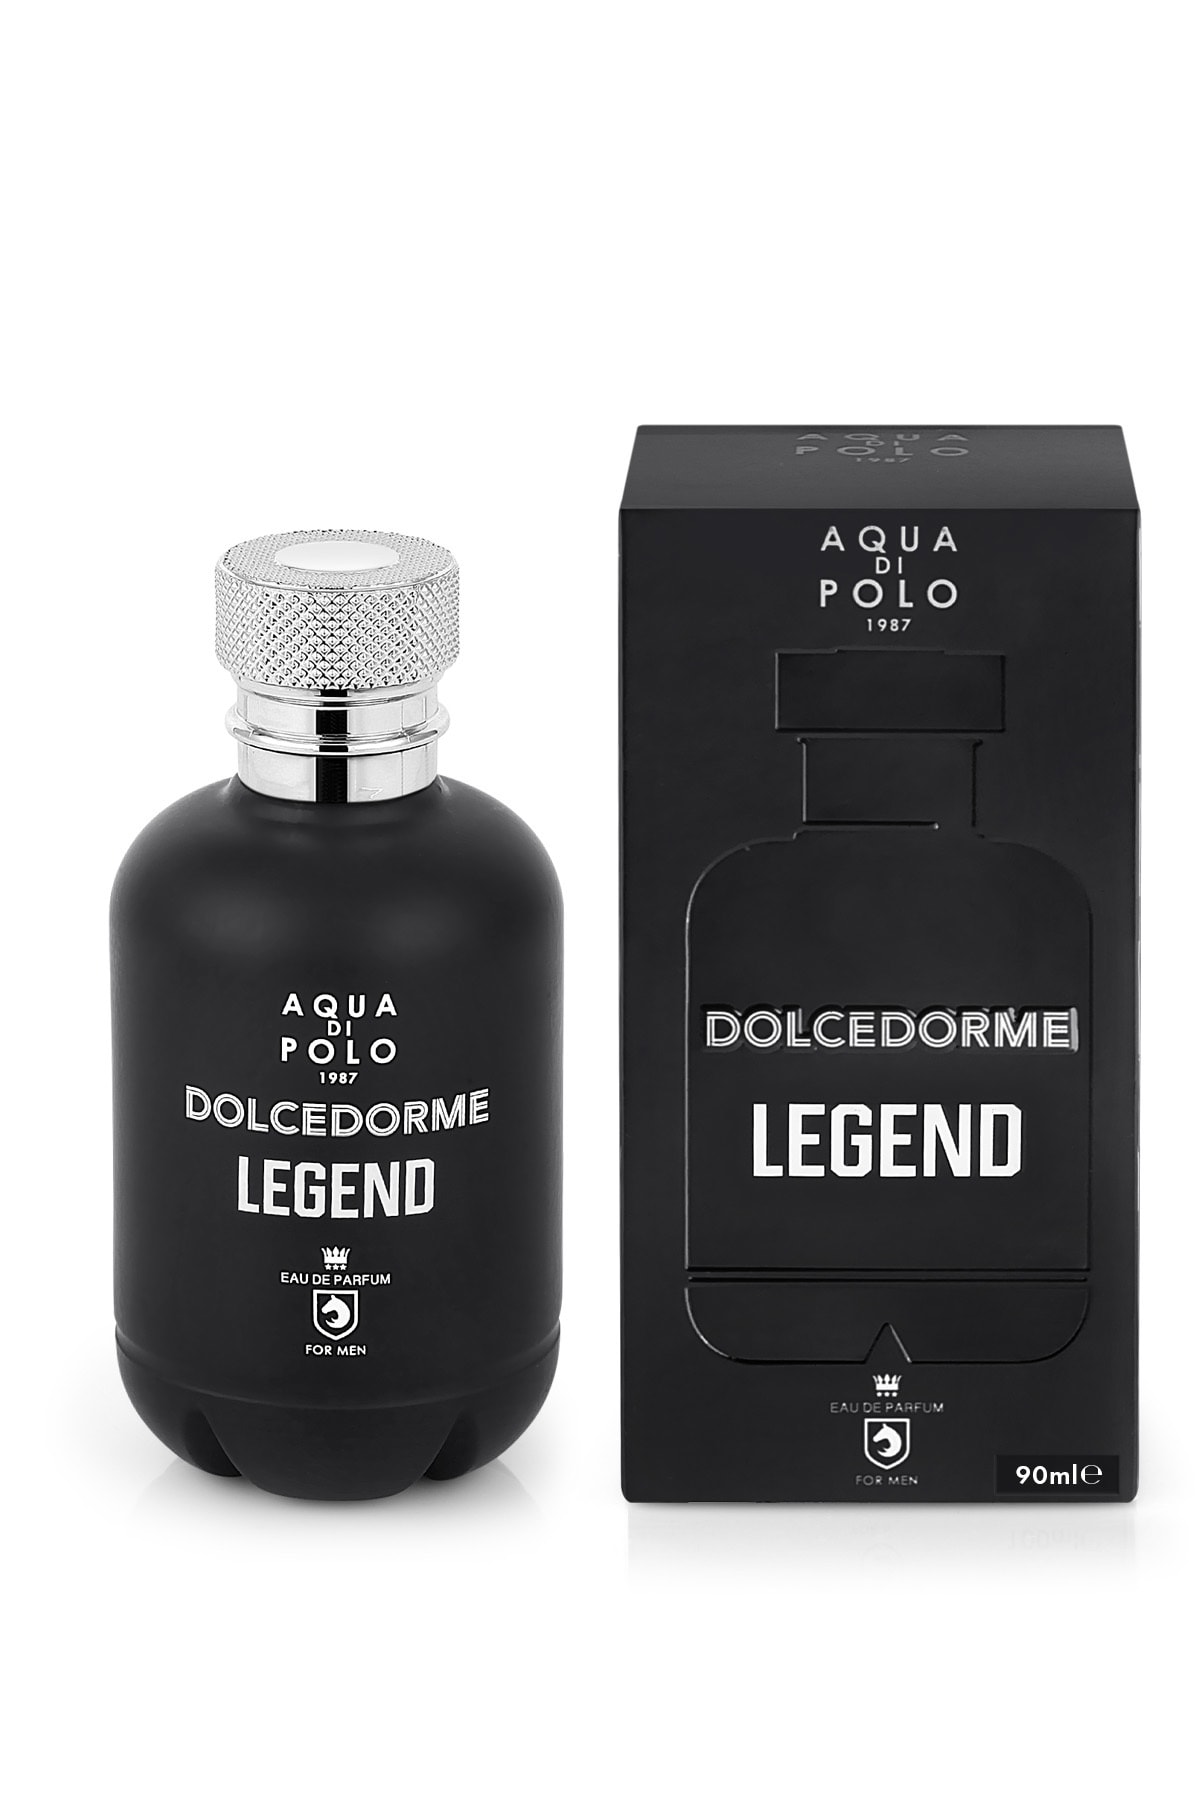 Aqua Di Polo 1987 Dolcedorme Legend 90ml Erkek Edp Parfüm Apcn000604